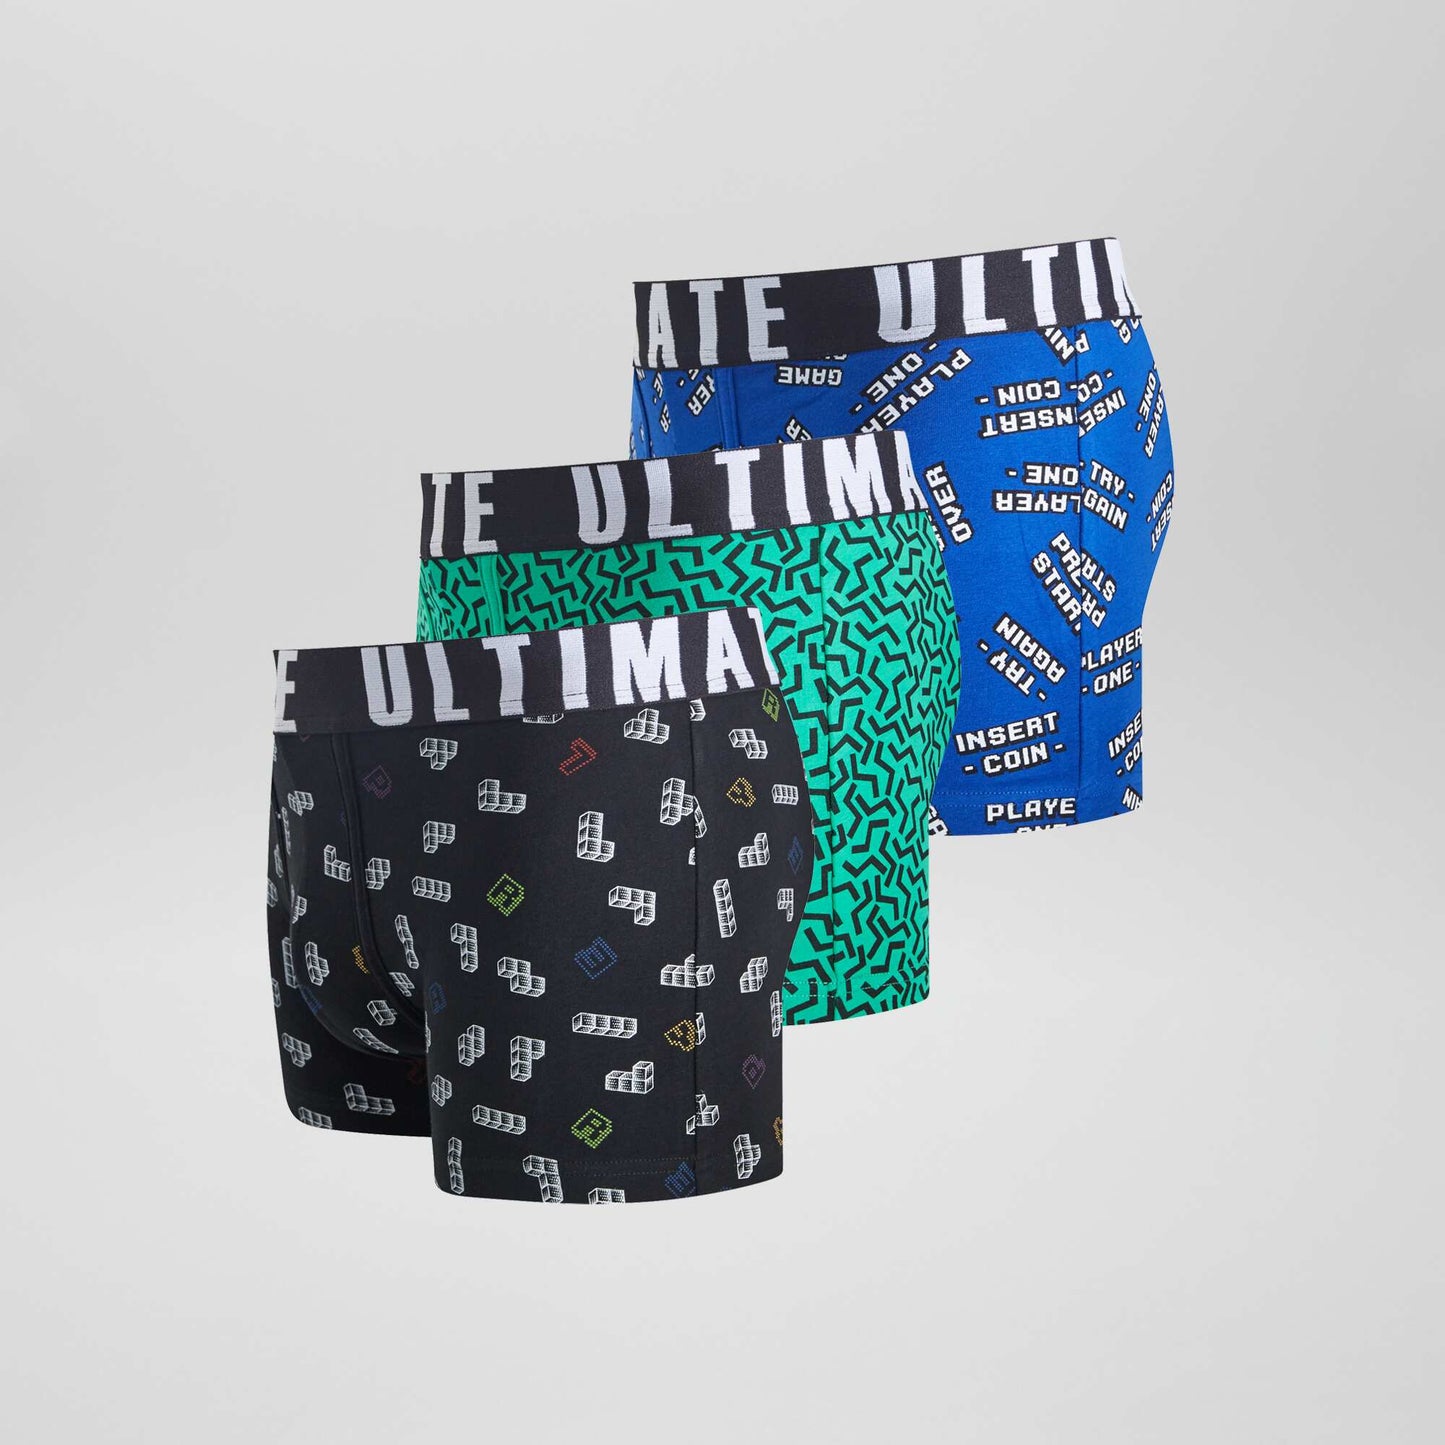 Pack of 3 patterned boxer shorts BLACK